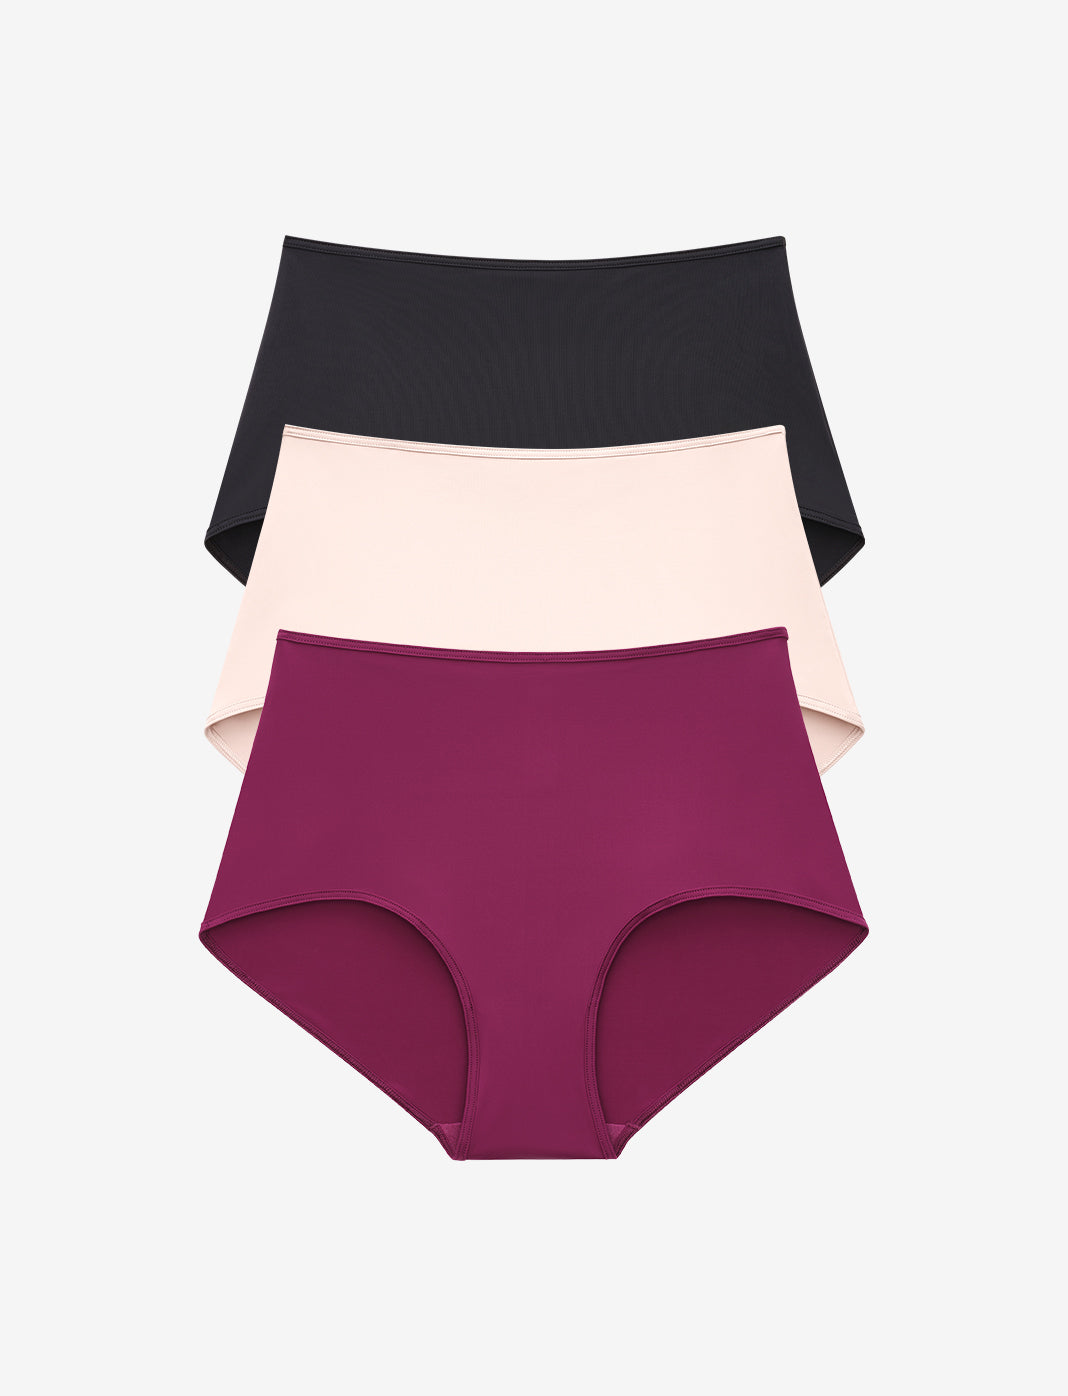 Shop Women's Workout Underwear - Best Seamless Hipster